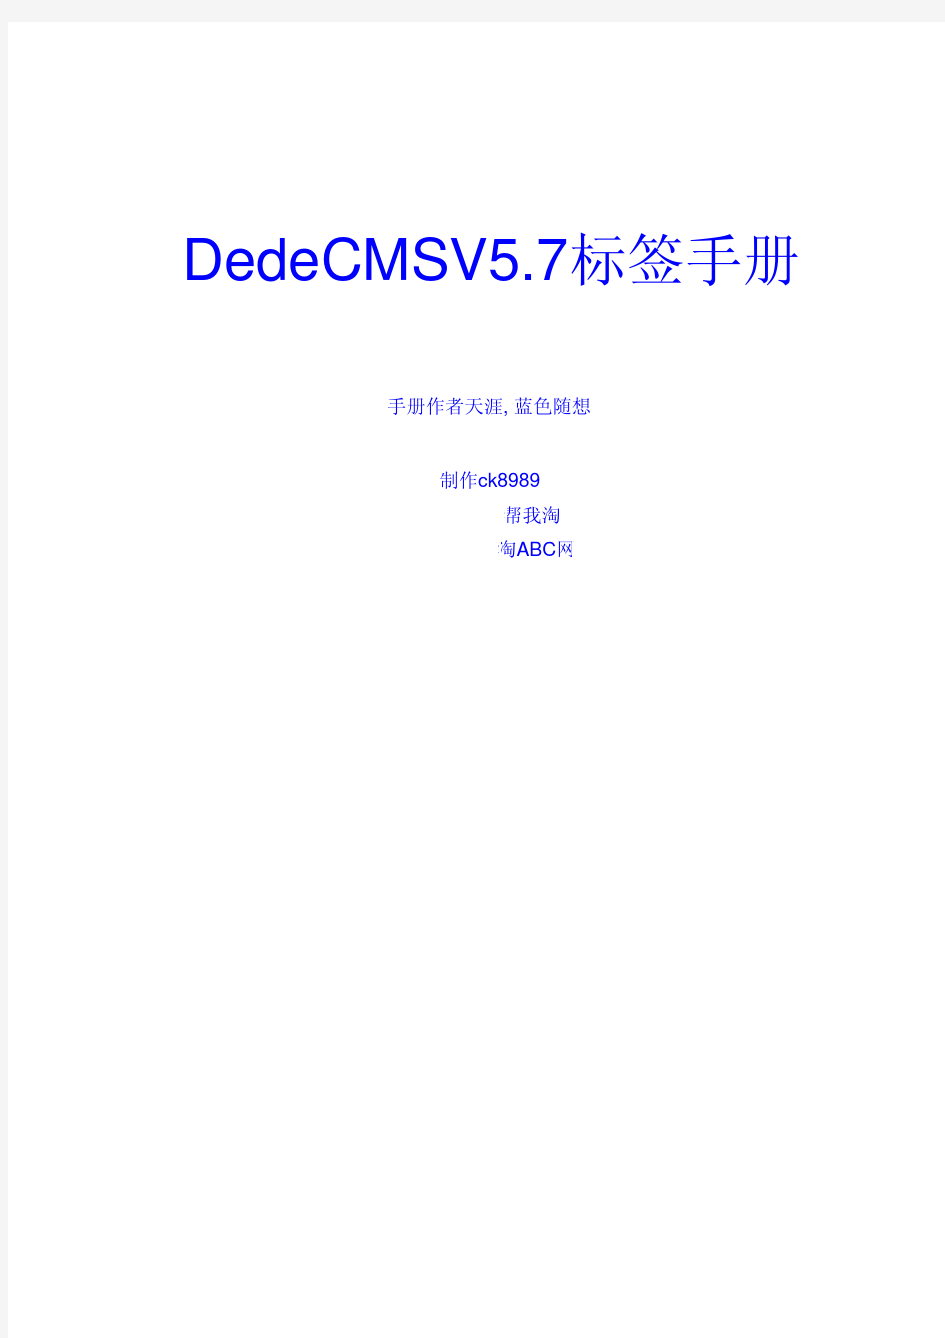 DedeCMSV5.7标签手册